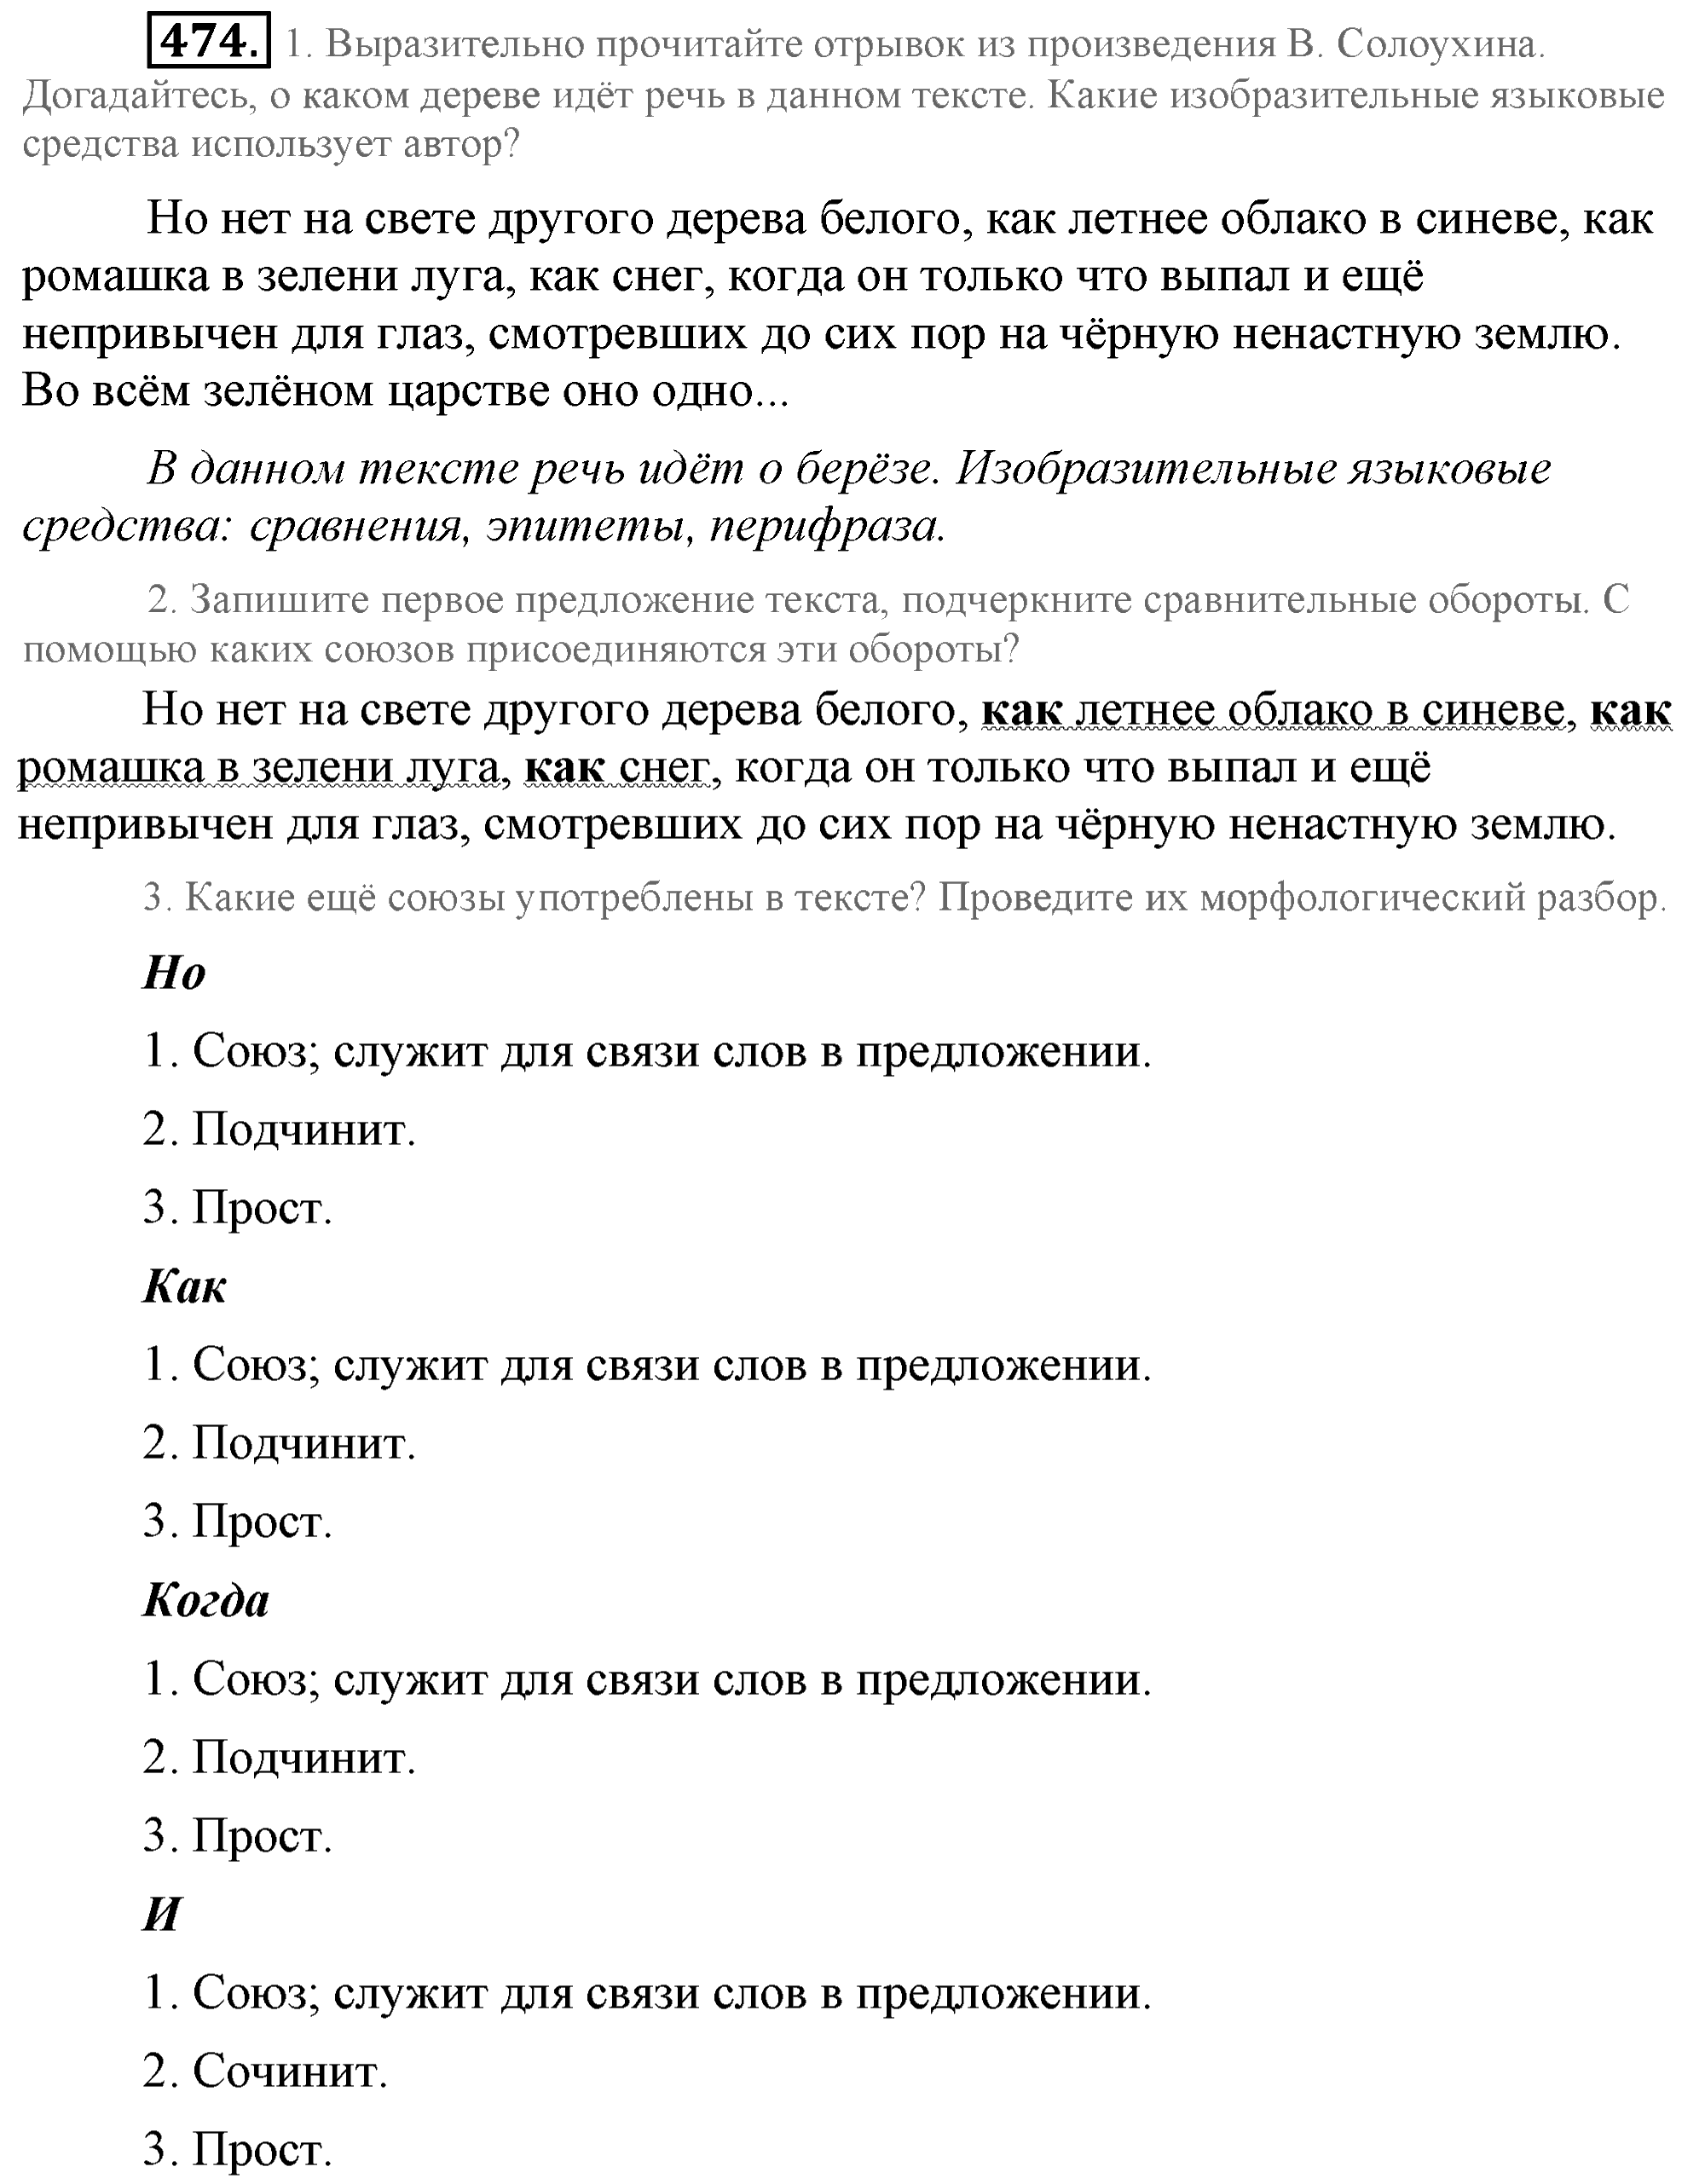 Практика, 7 класс, М.М. Разумовская, 2009, задача: 474